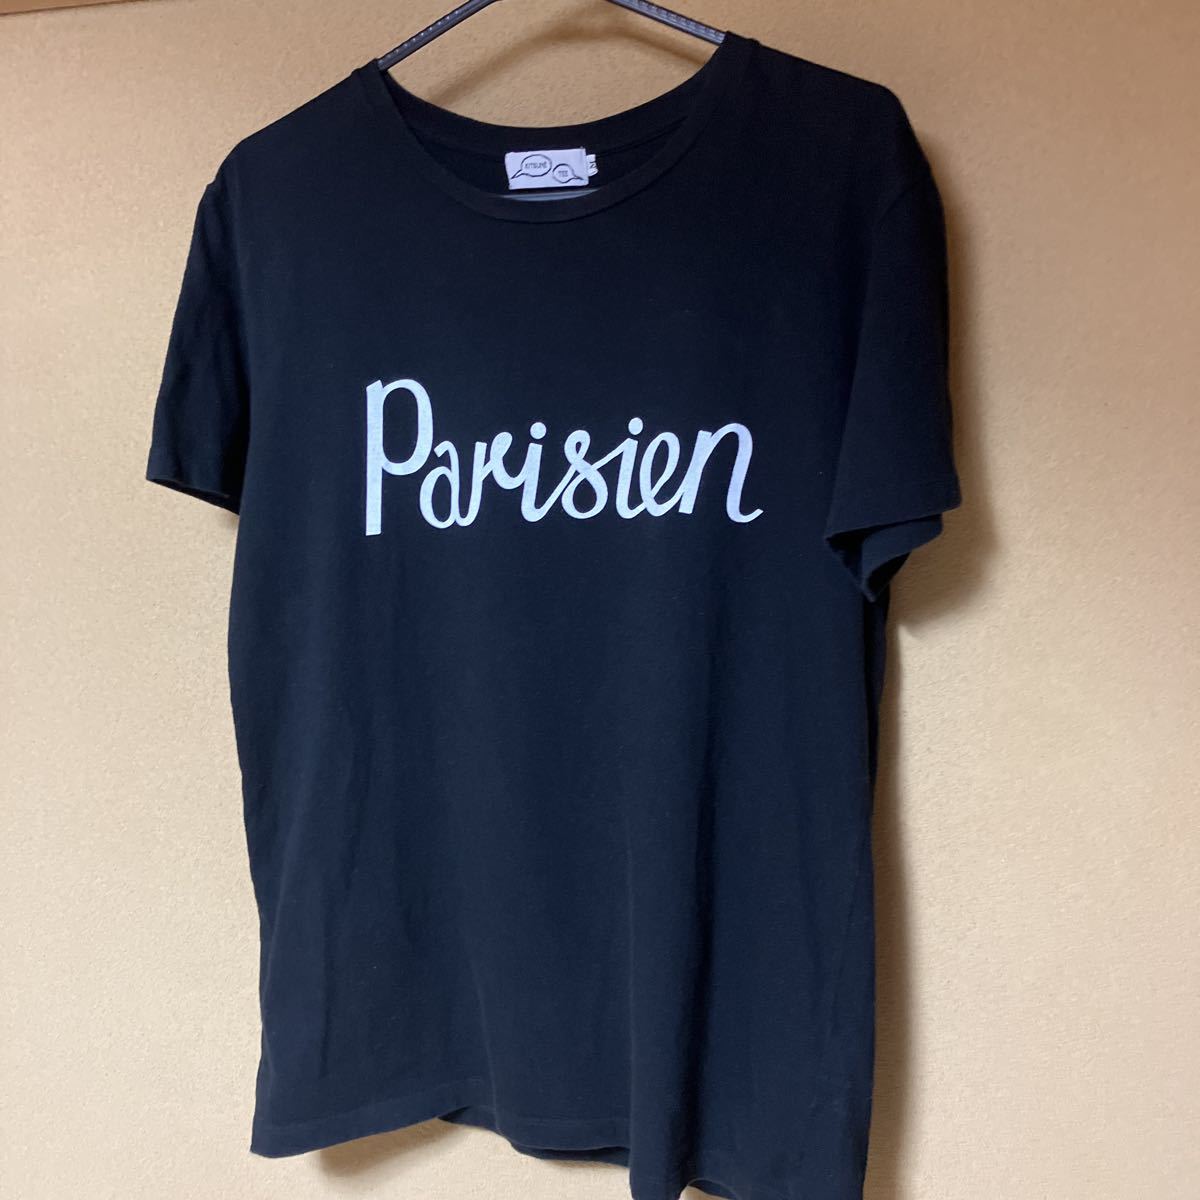 Maison Kitsun mezzo n лисица футболка размер M черный сделано в Японии 